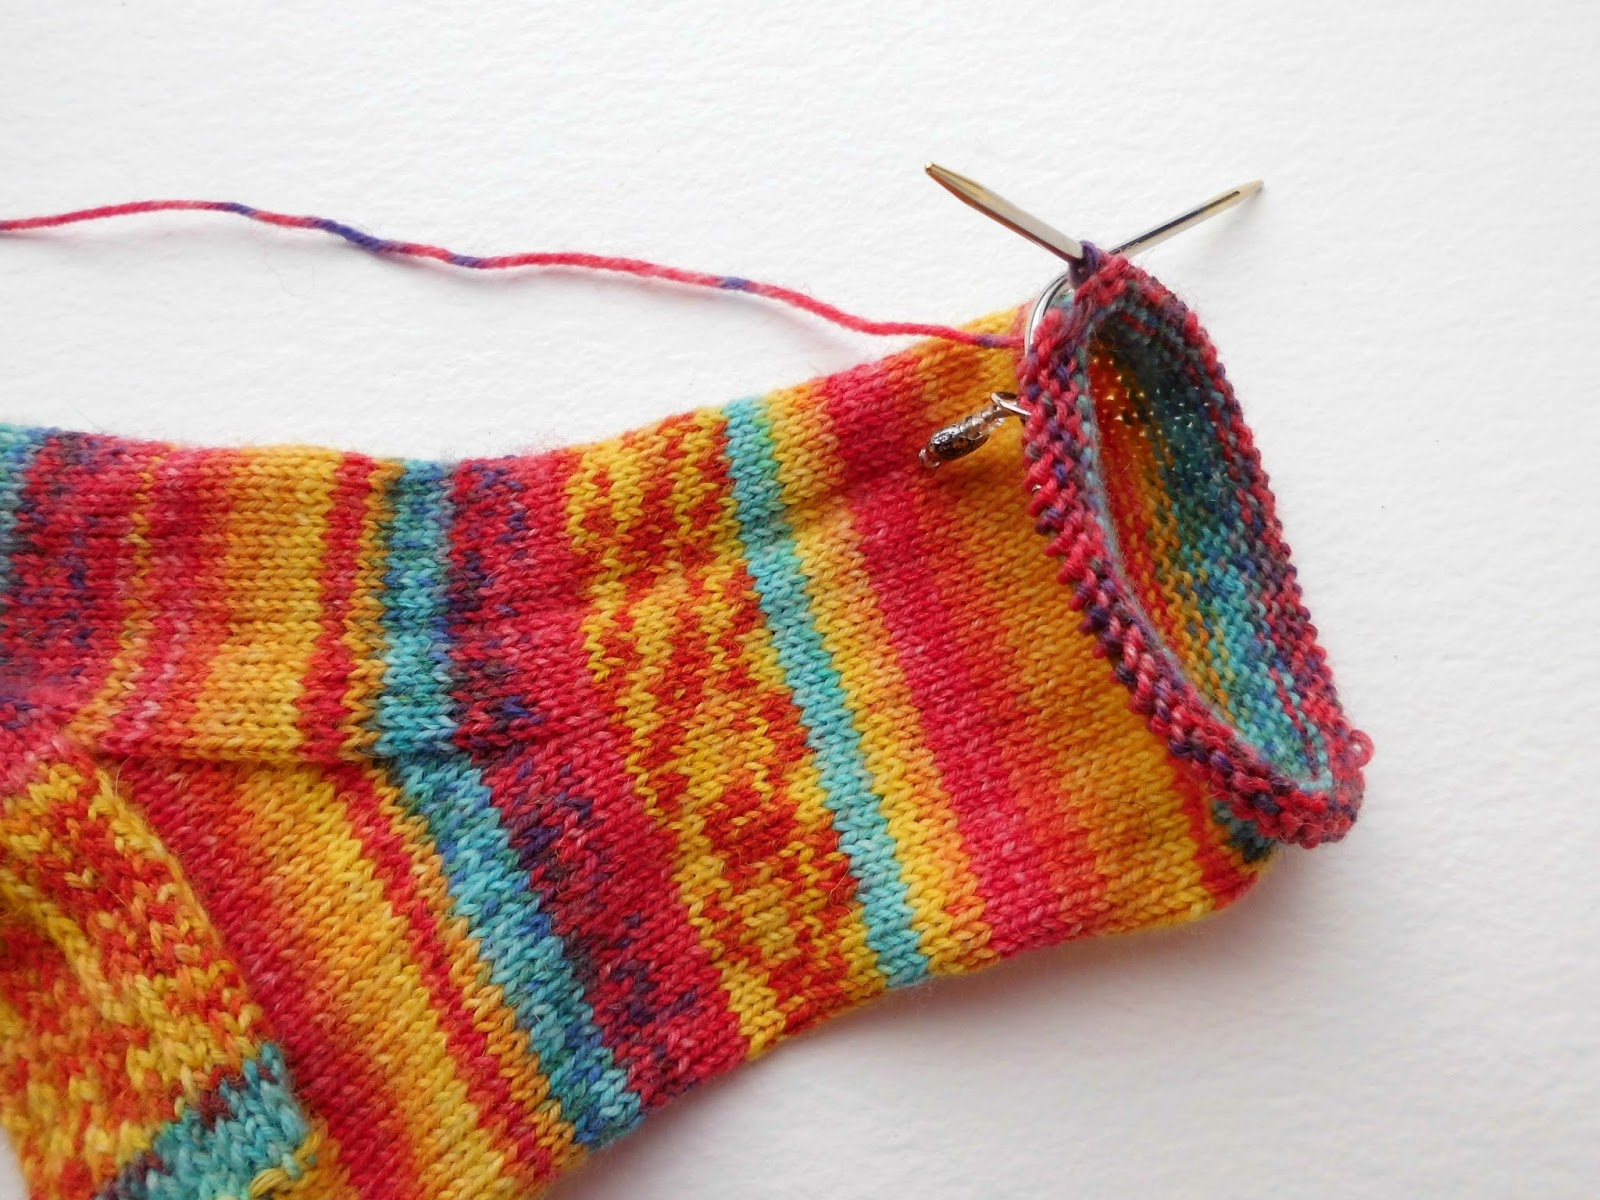 Knitting Socks On Circular Needles Pattern Knitting Socks Round Needles Image Sock And Collections